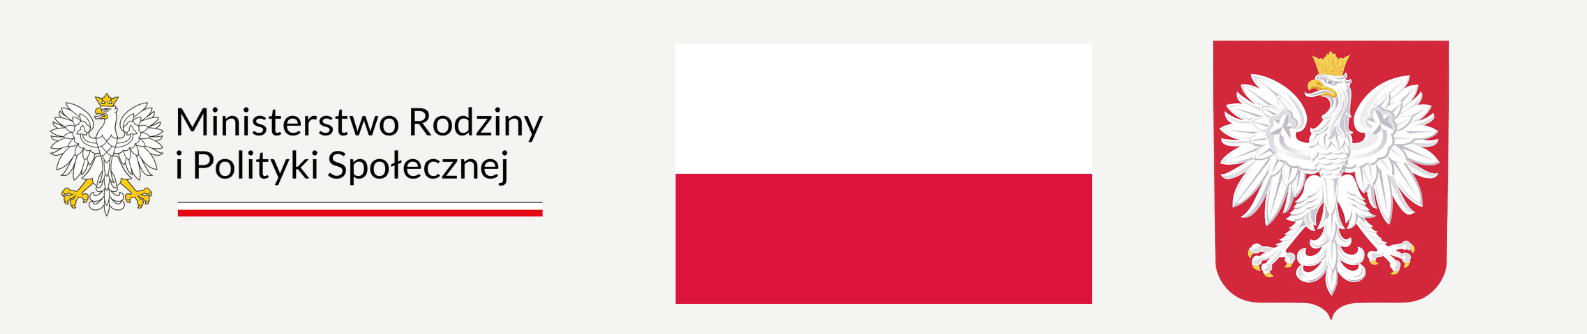 Logo MRiPR, flaga Polski, godło Polski